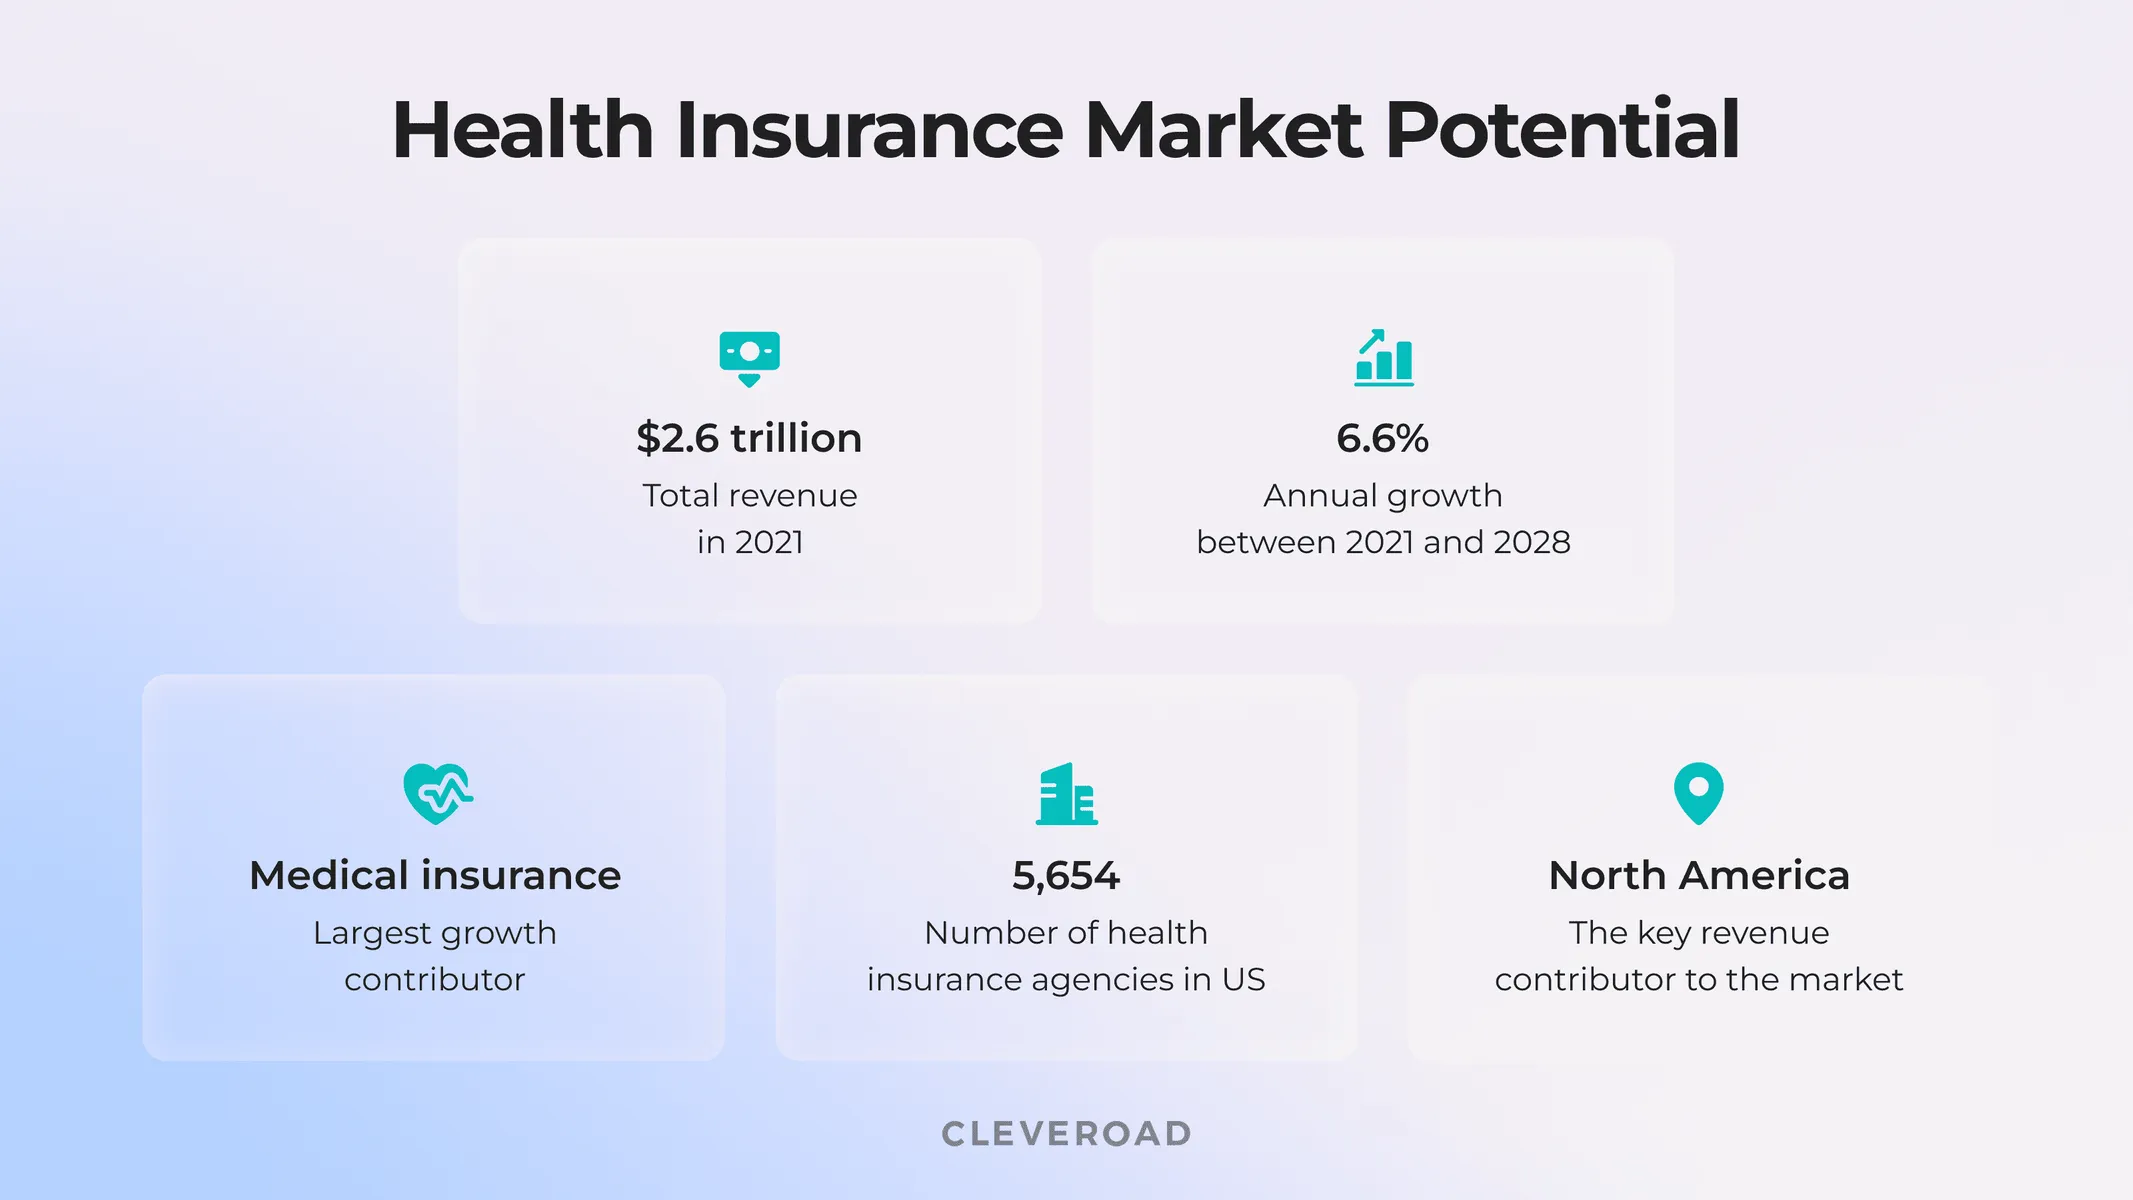 Health insurance market potential